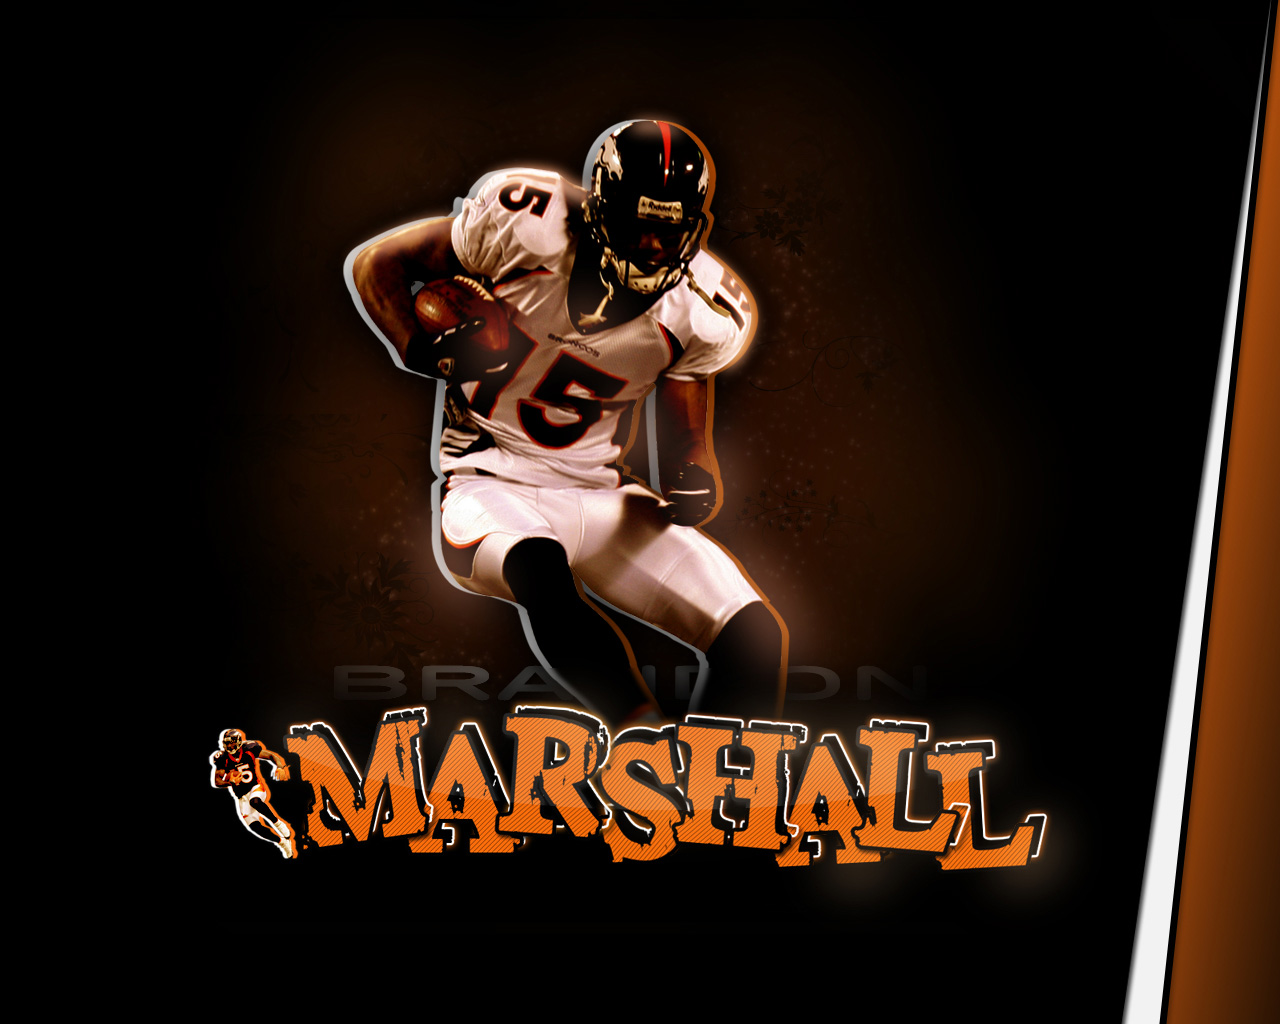 Brandon Marshall Wallpaper Football Picture Image And Photo